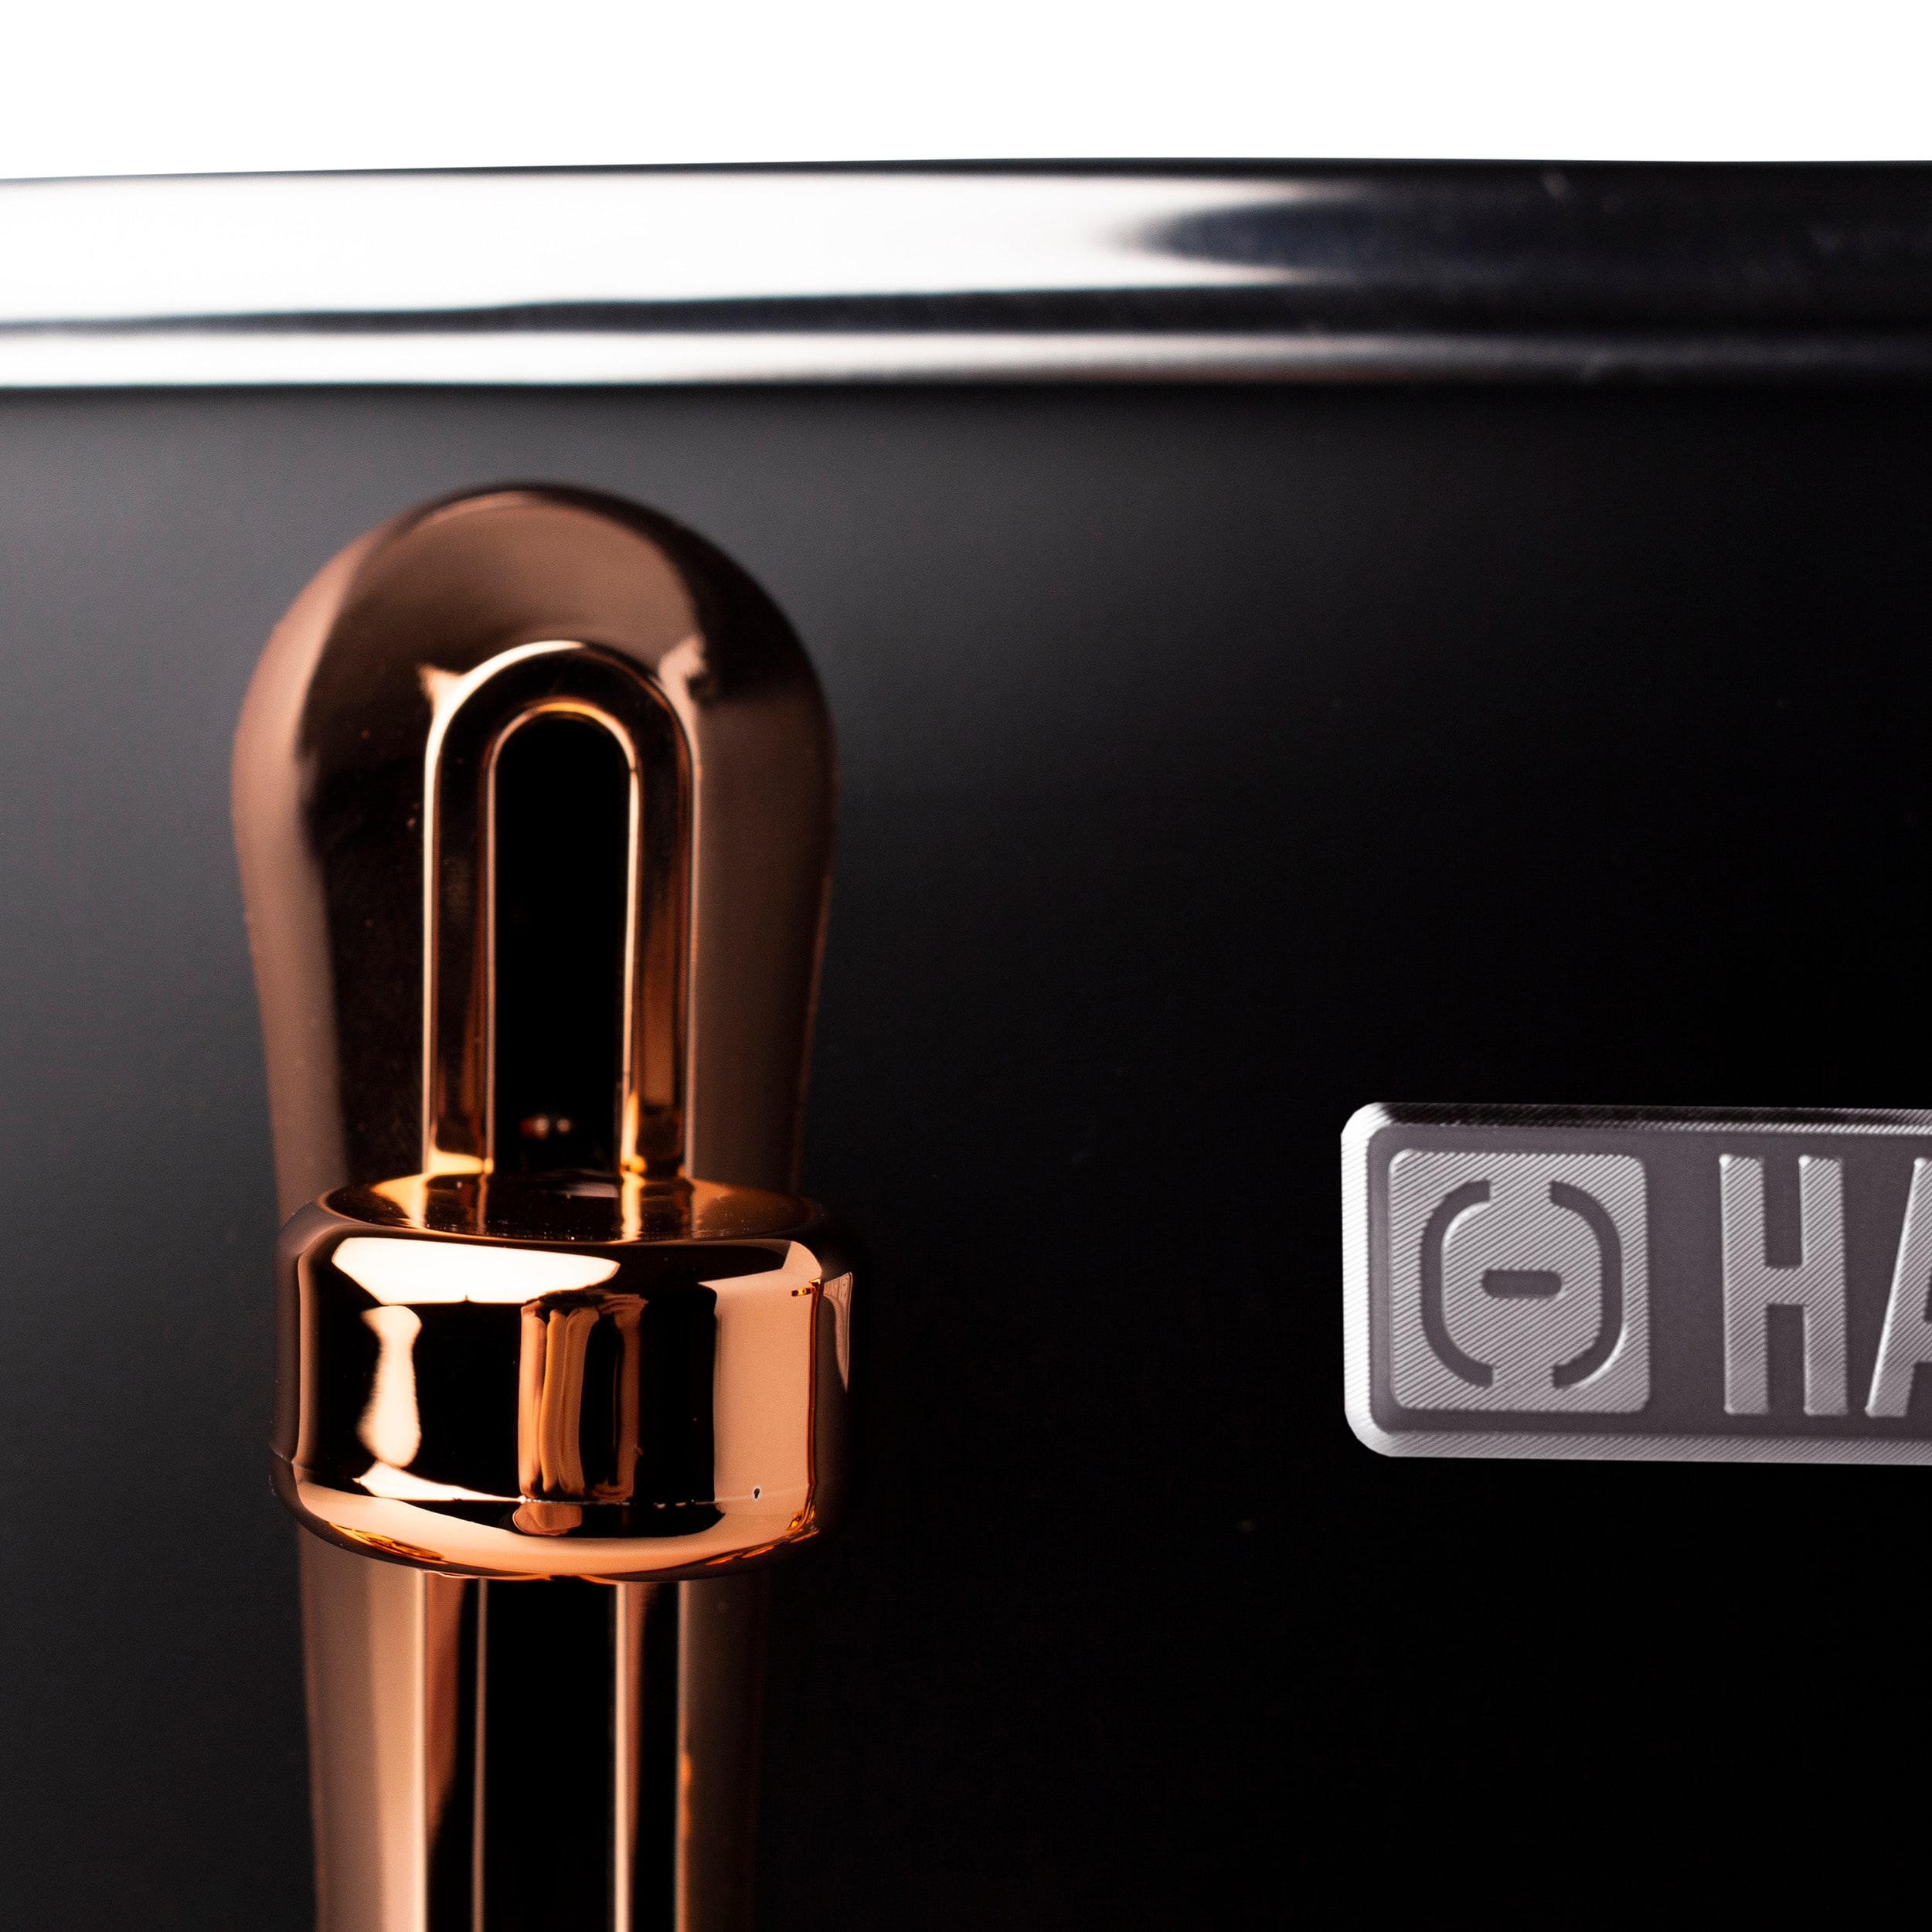 Haden Heritage Stainless Steel 2-Slice Toaster - Bed Bath & Beyond -  34527210